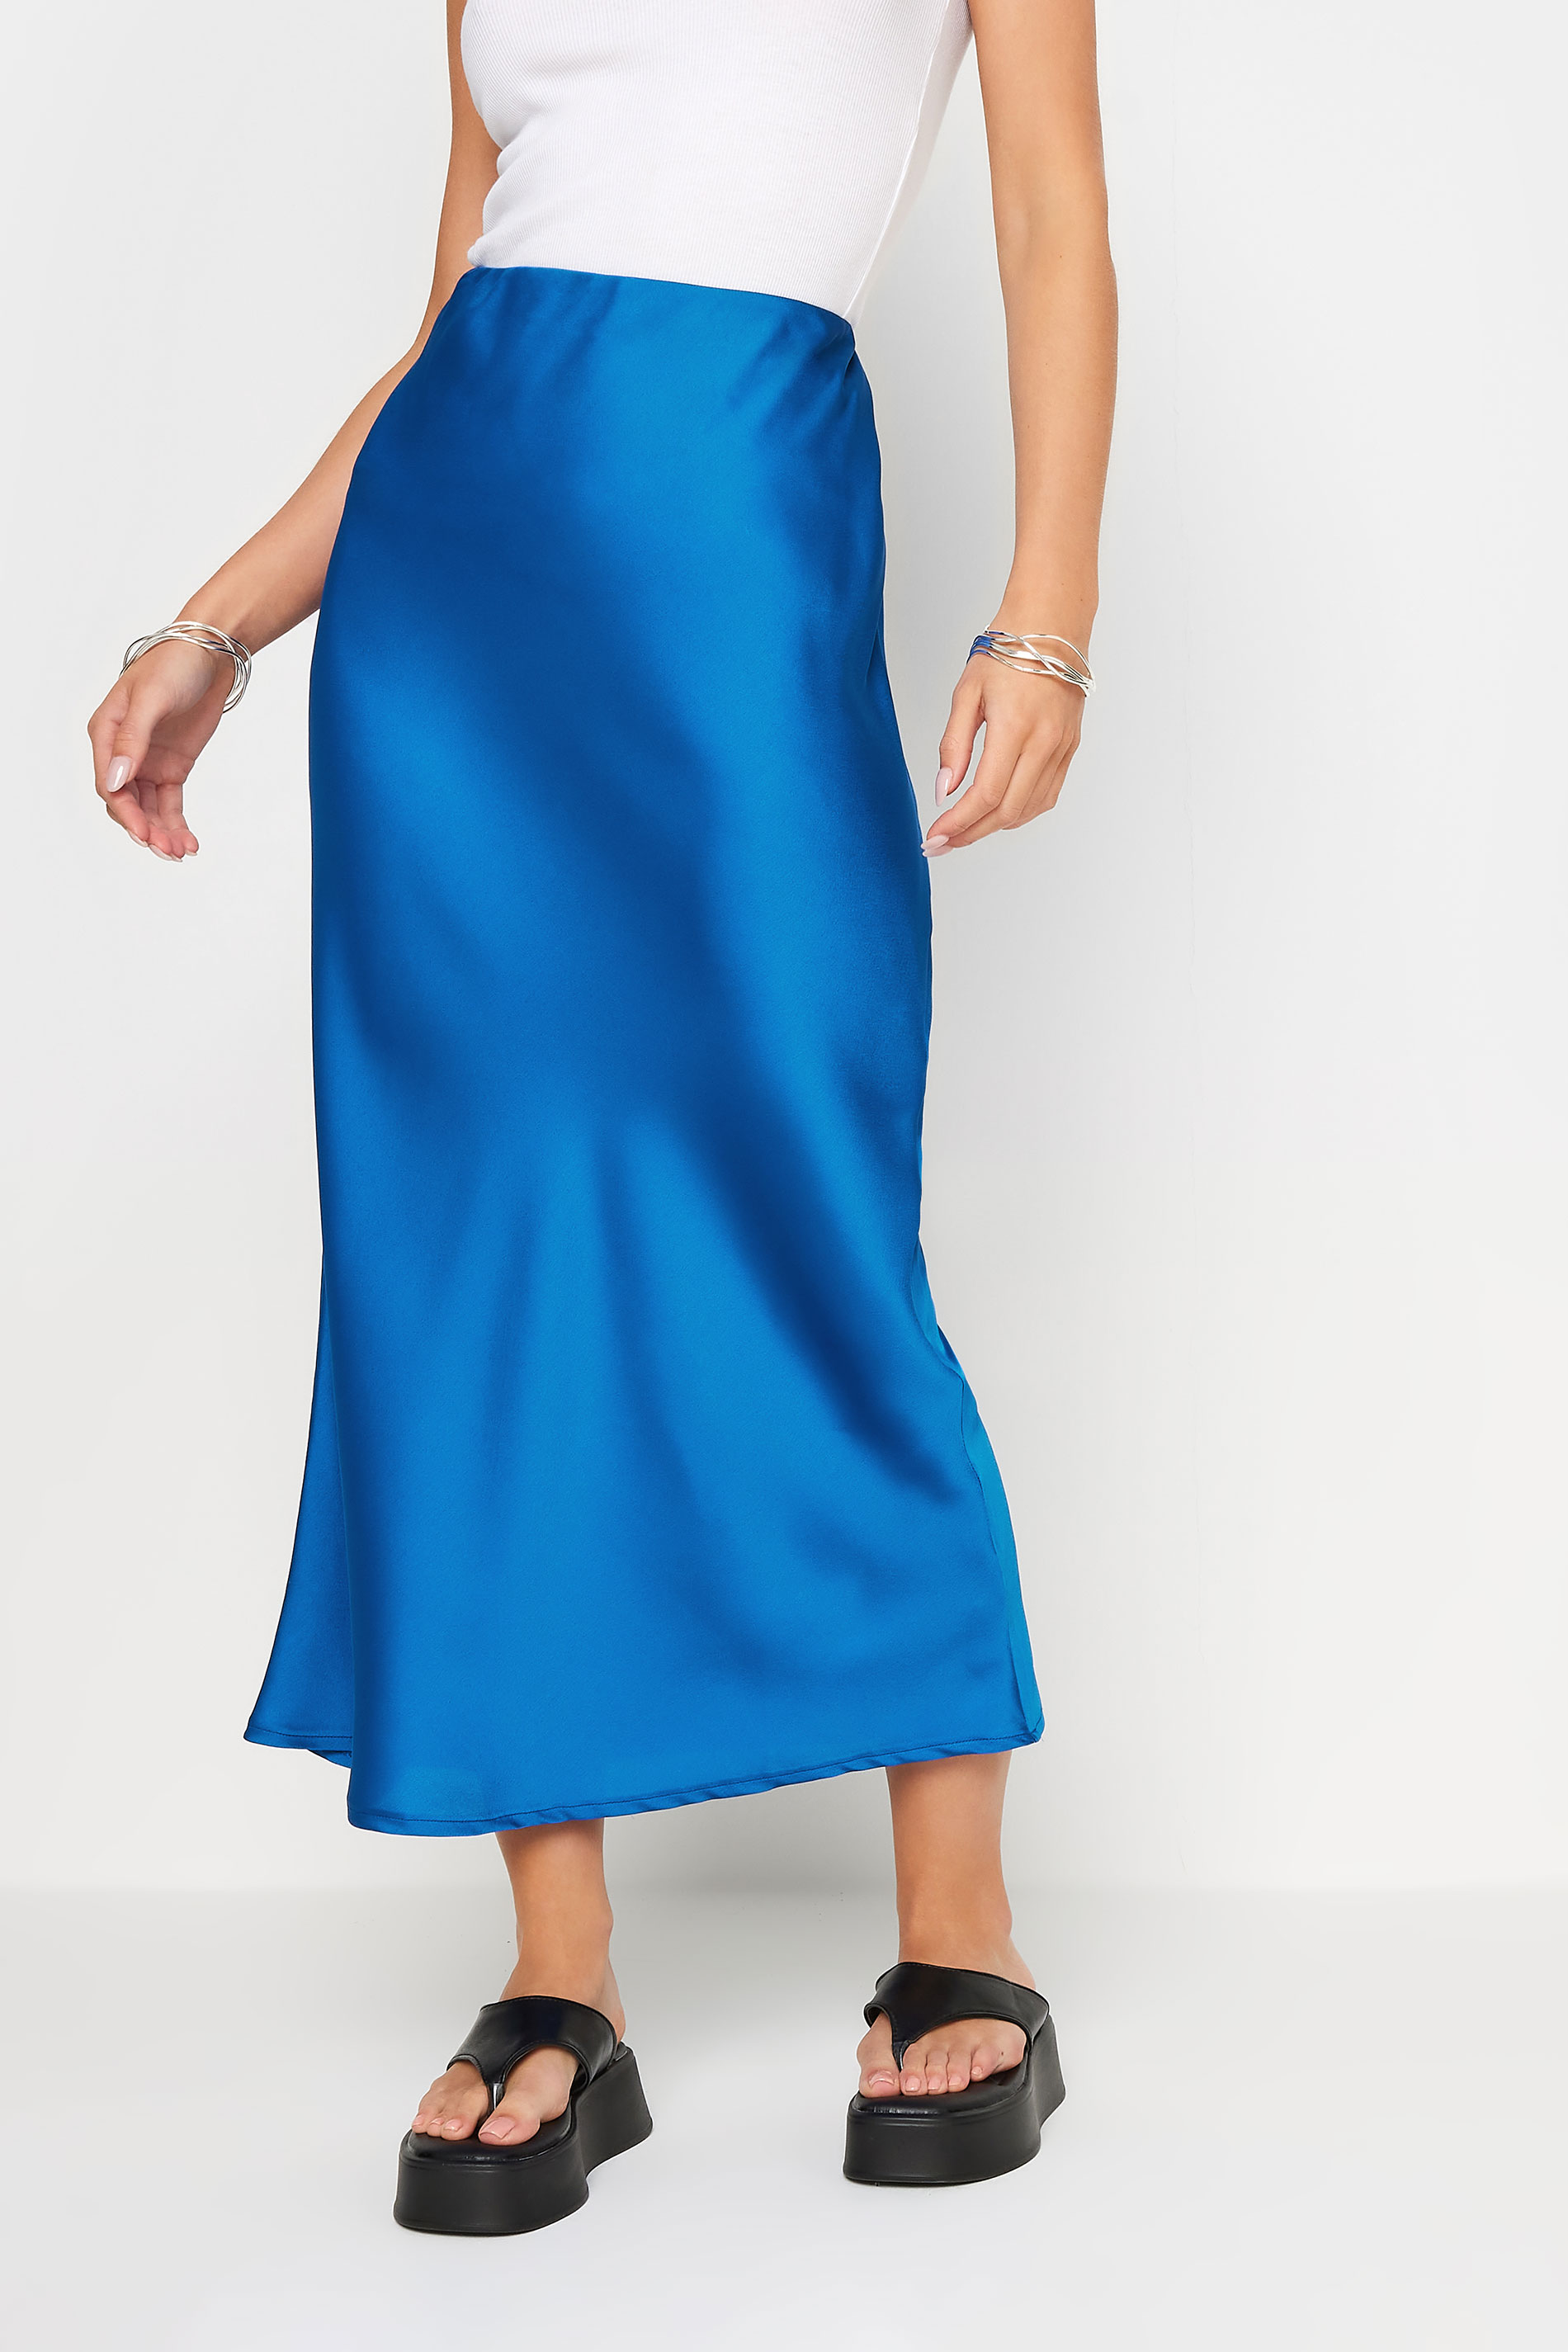 PixieGirl Petite Women's Cobalt Blue Satin Midaxi Skirt | PixieGirl 3